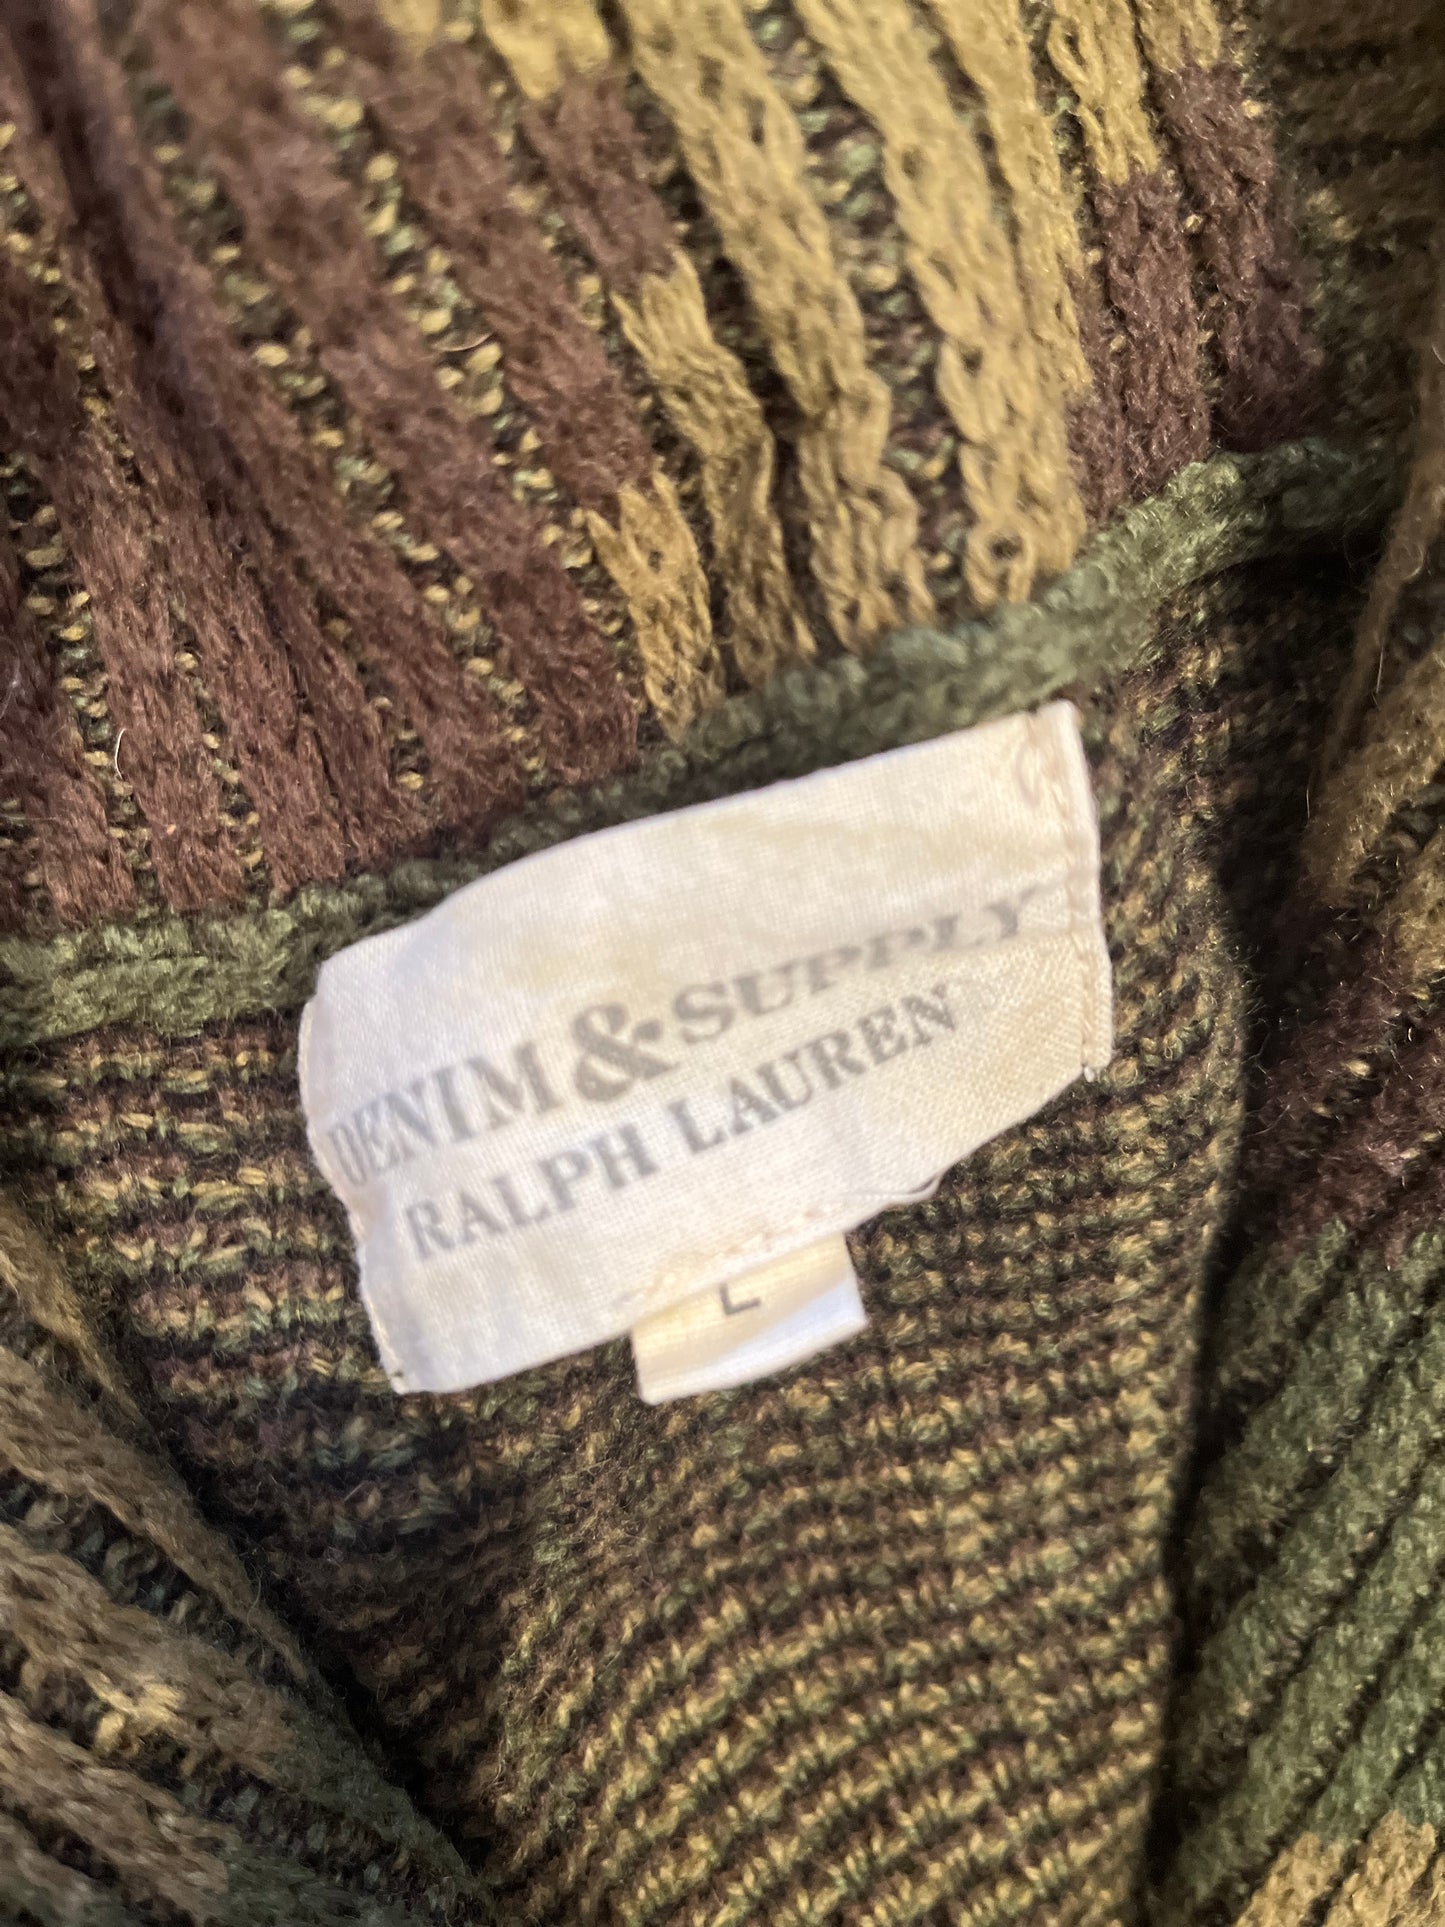 Ralph Lauren Denim & Supply Camouflage Light Knit Cardigan Size L 100% Cotton Fits more like a Medium